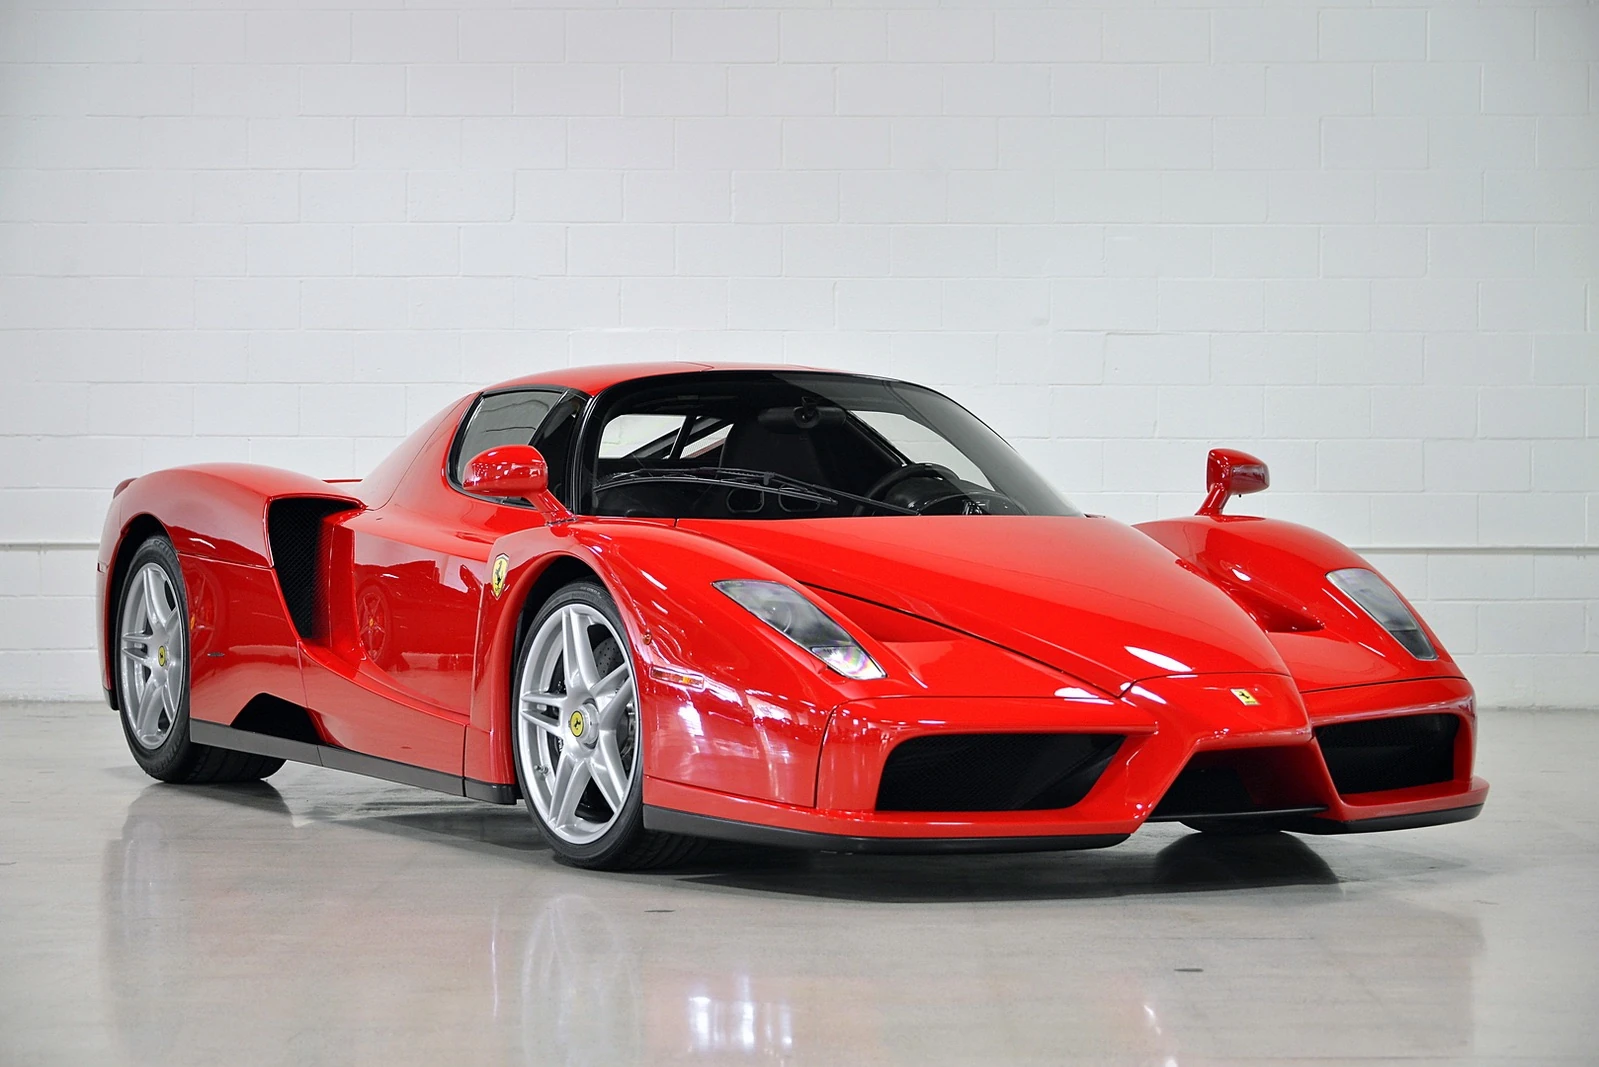 Close-up photo of an Enzo Ferrari, showcasing its sleek design, aerodynamic features, and iconic Ferrari emblem.